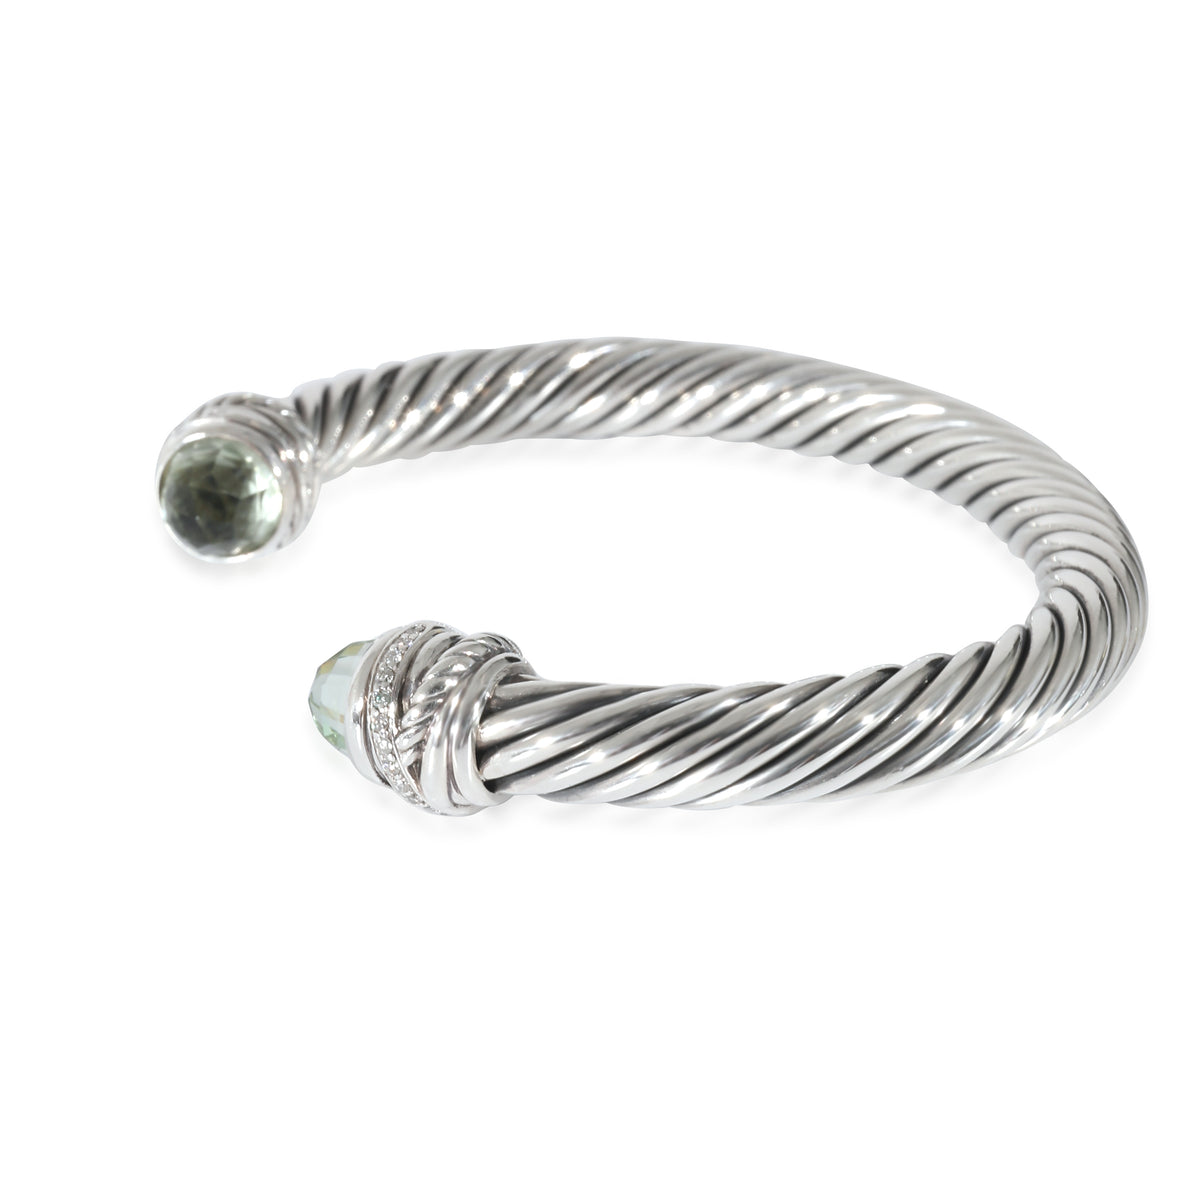 David Yurman Cable Prasiolite Bracelet in Sterling Silver 0.07 CTW